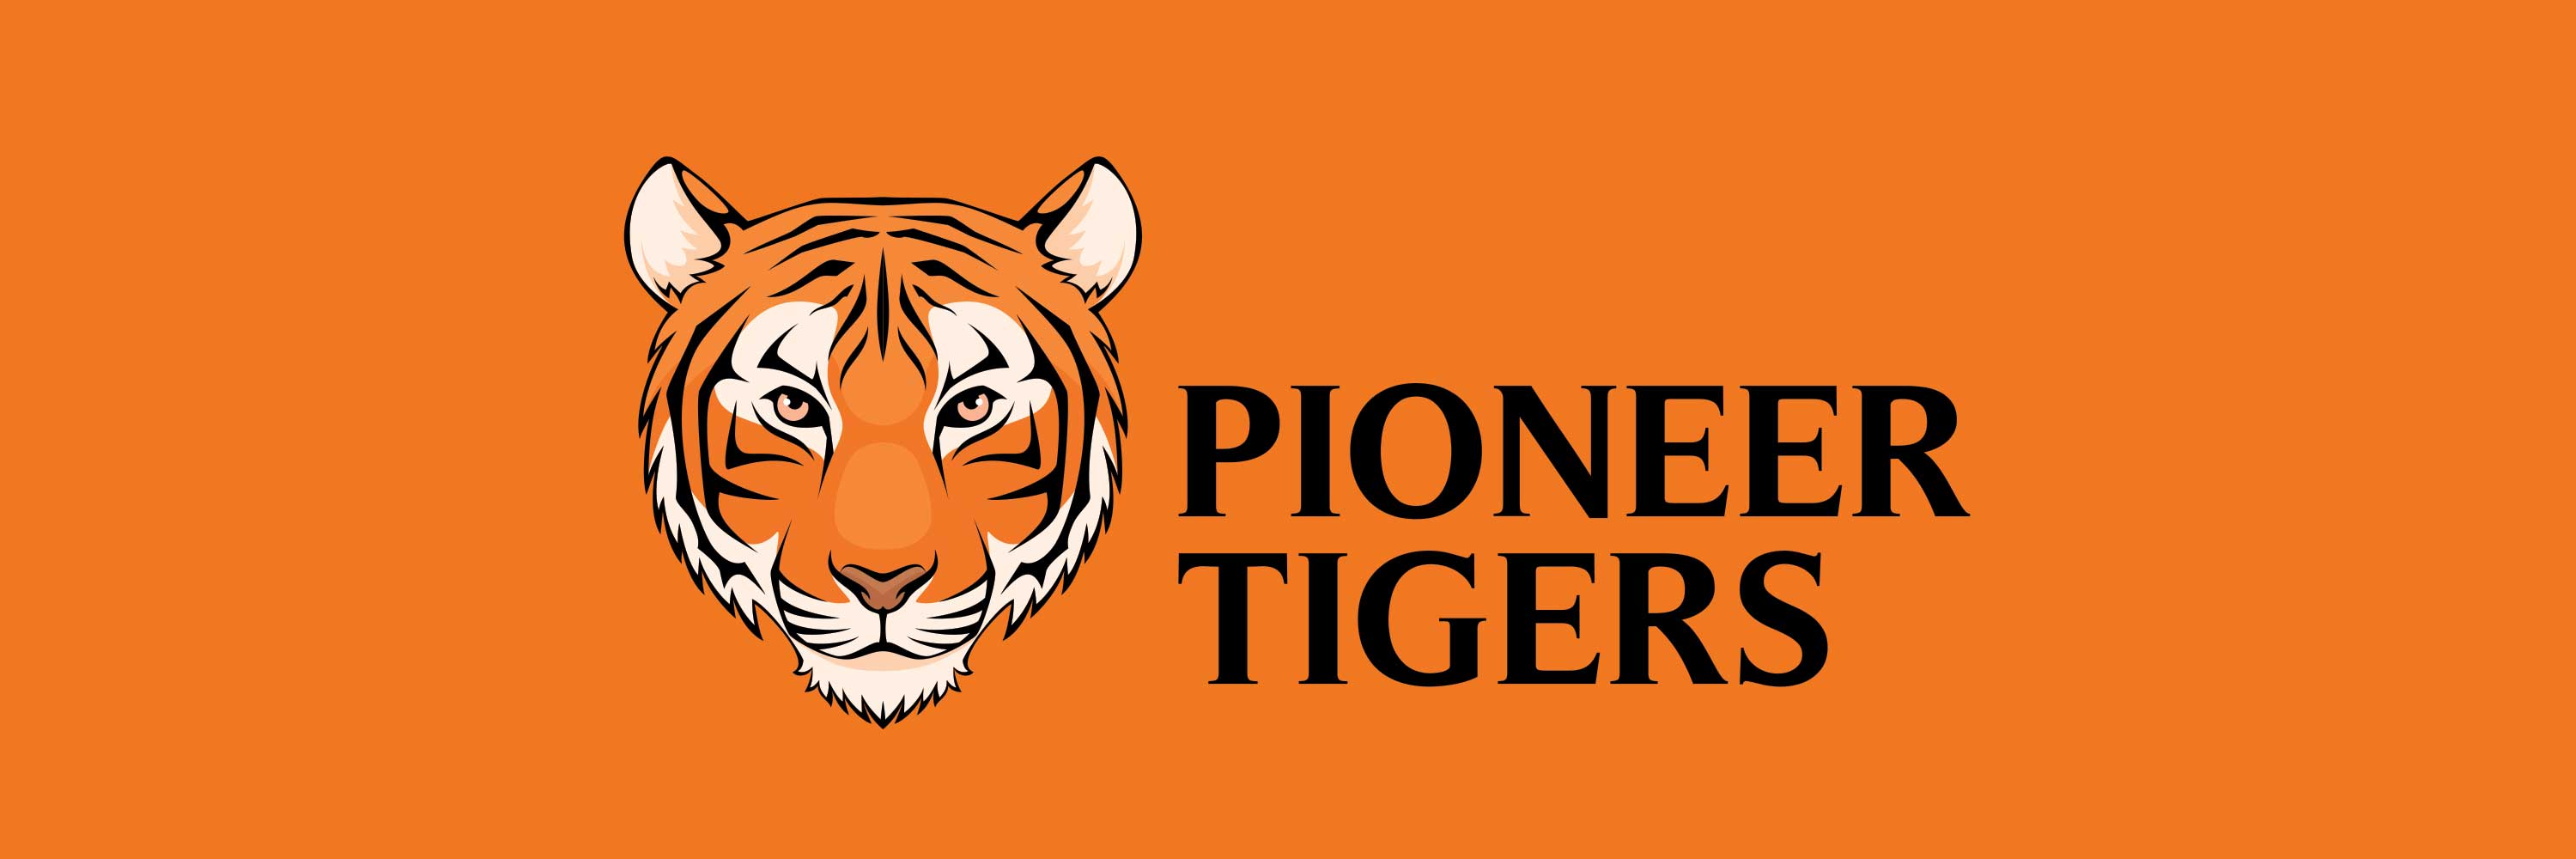 HUDDLE - Pioneer Tigers